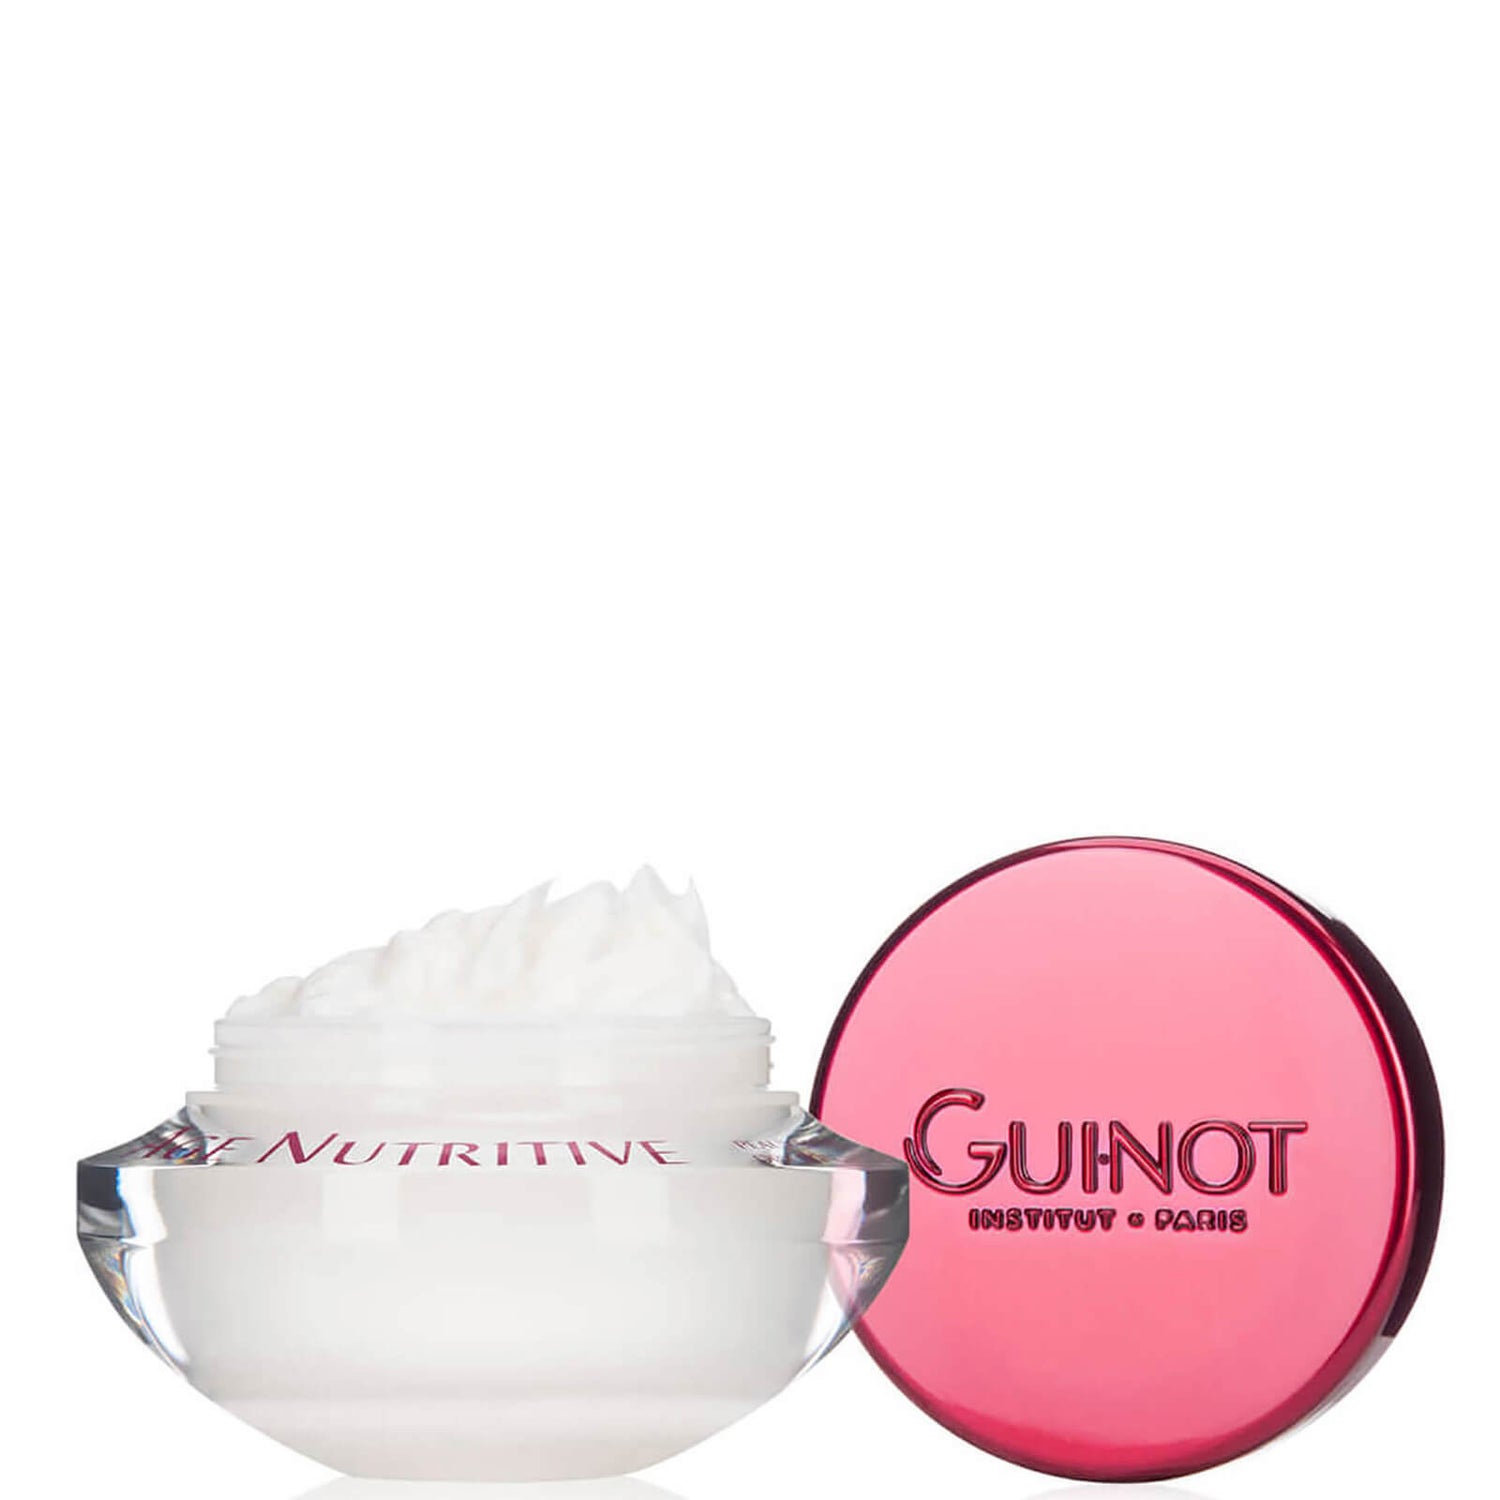 Guinot Age Nutritive Face Cream (1.6 oz.)